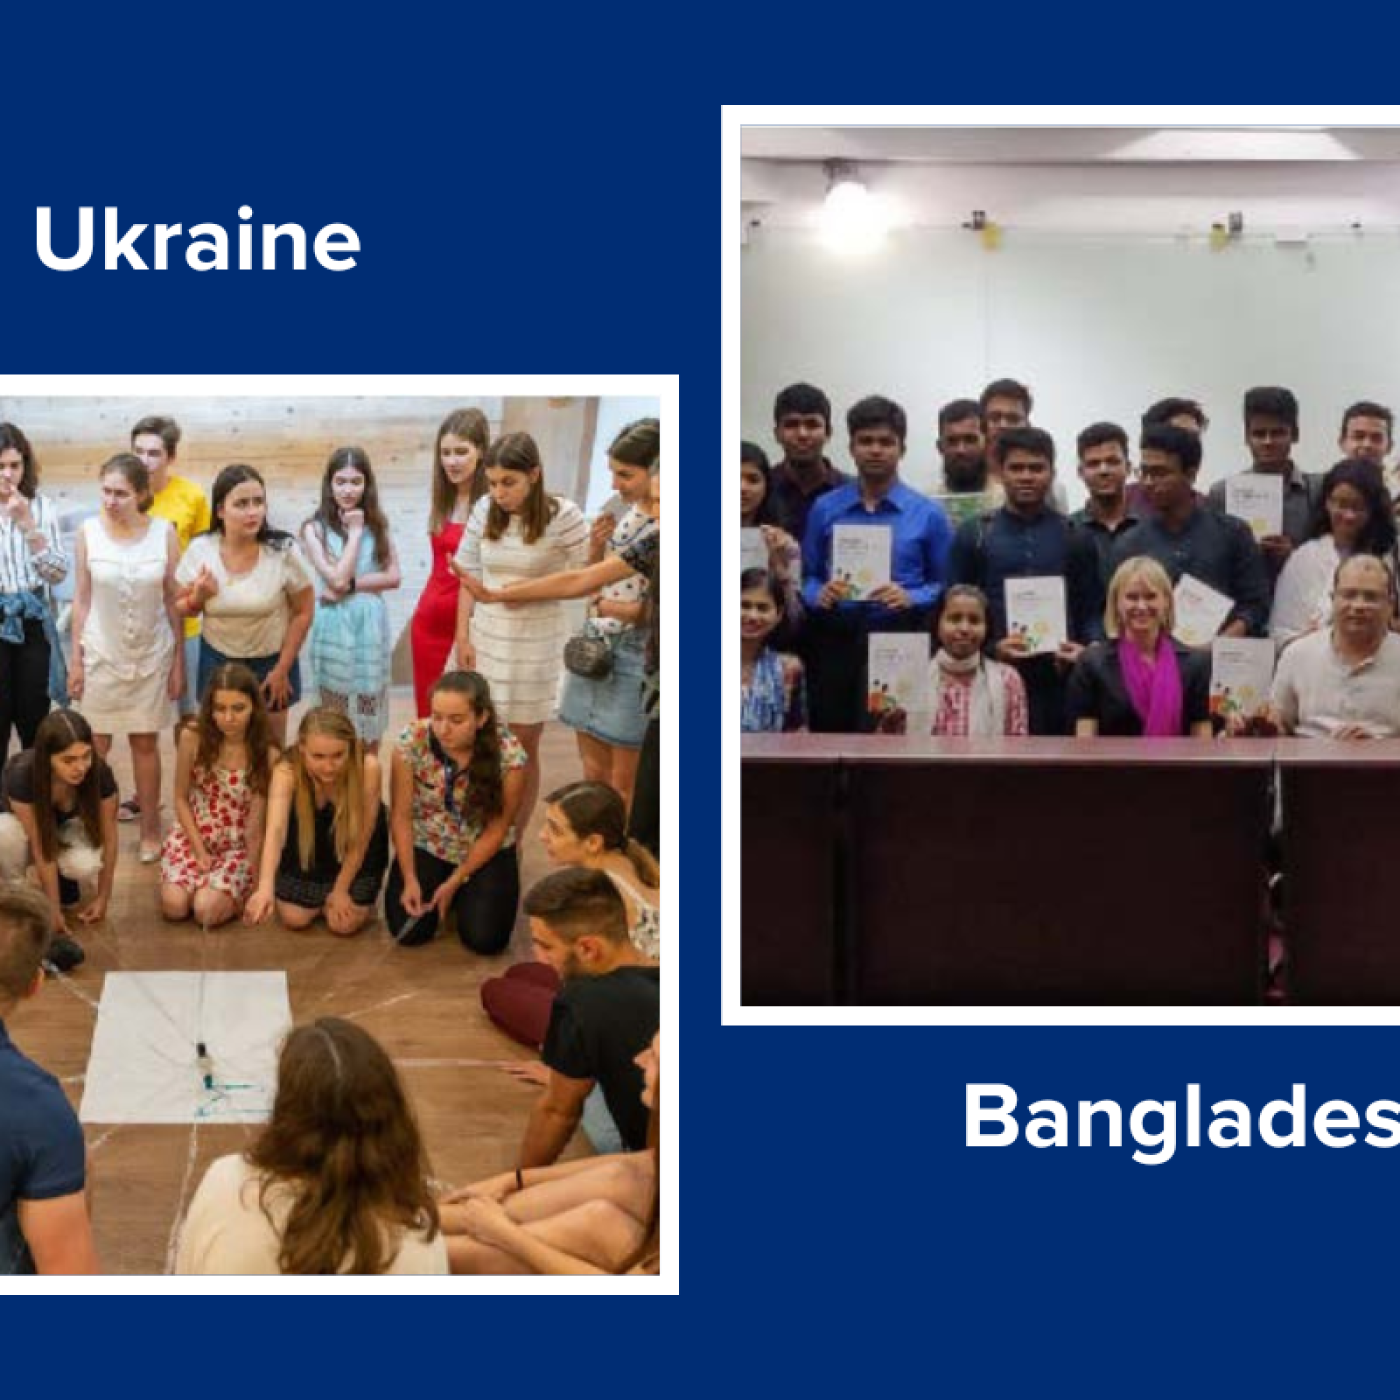 Seed participants left to right in Georgia, Ukraine, Bangladesh, Armenia